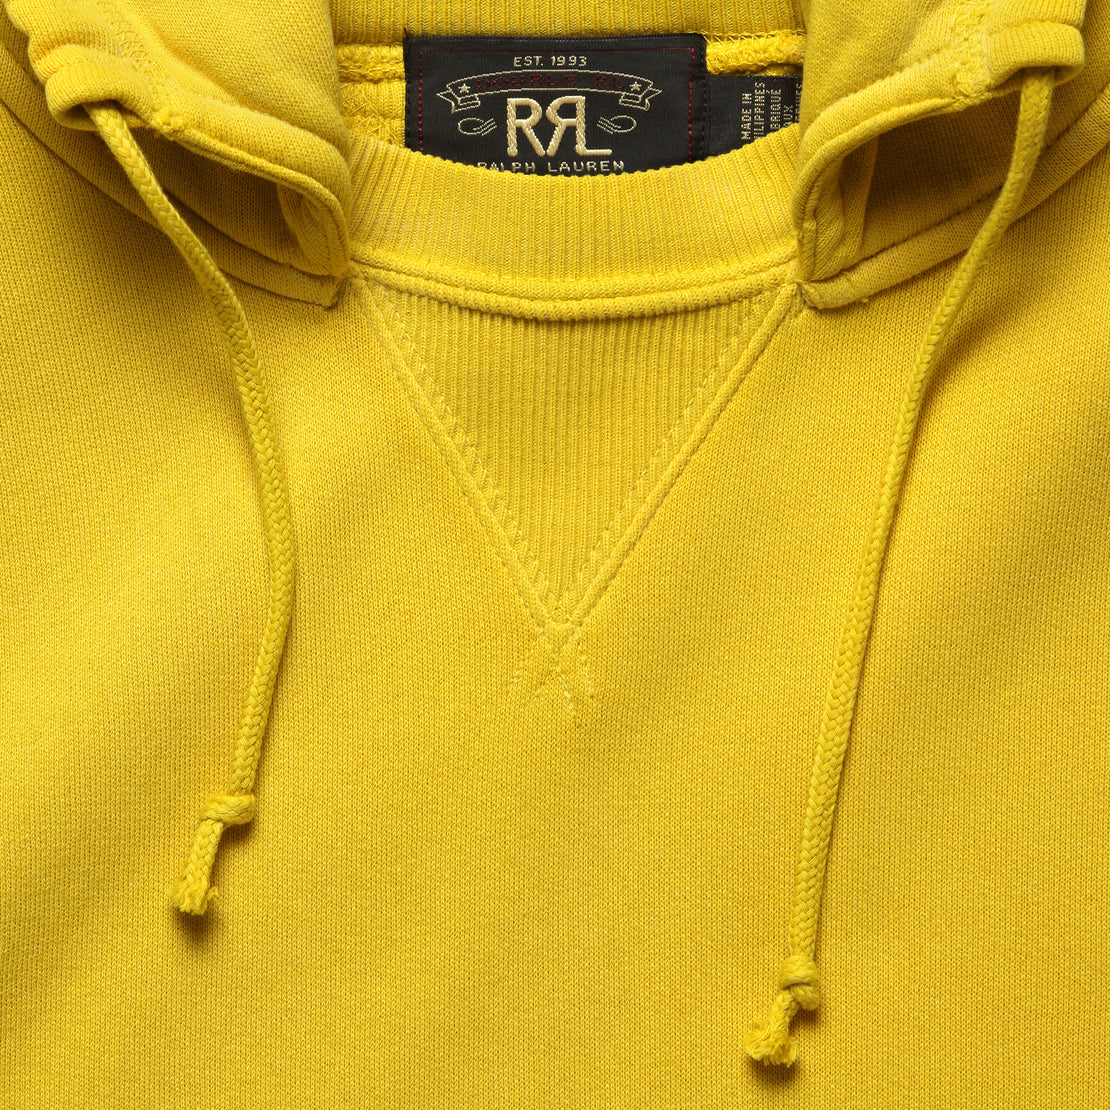 Distressed Fleece Hoodie - Vintage Gold - RRL - STAG Provisions - Tops - Fleece / Sweatshirt